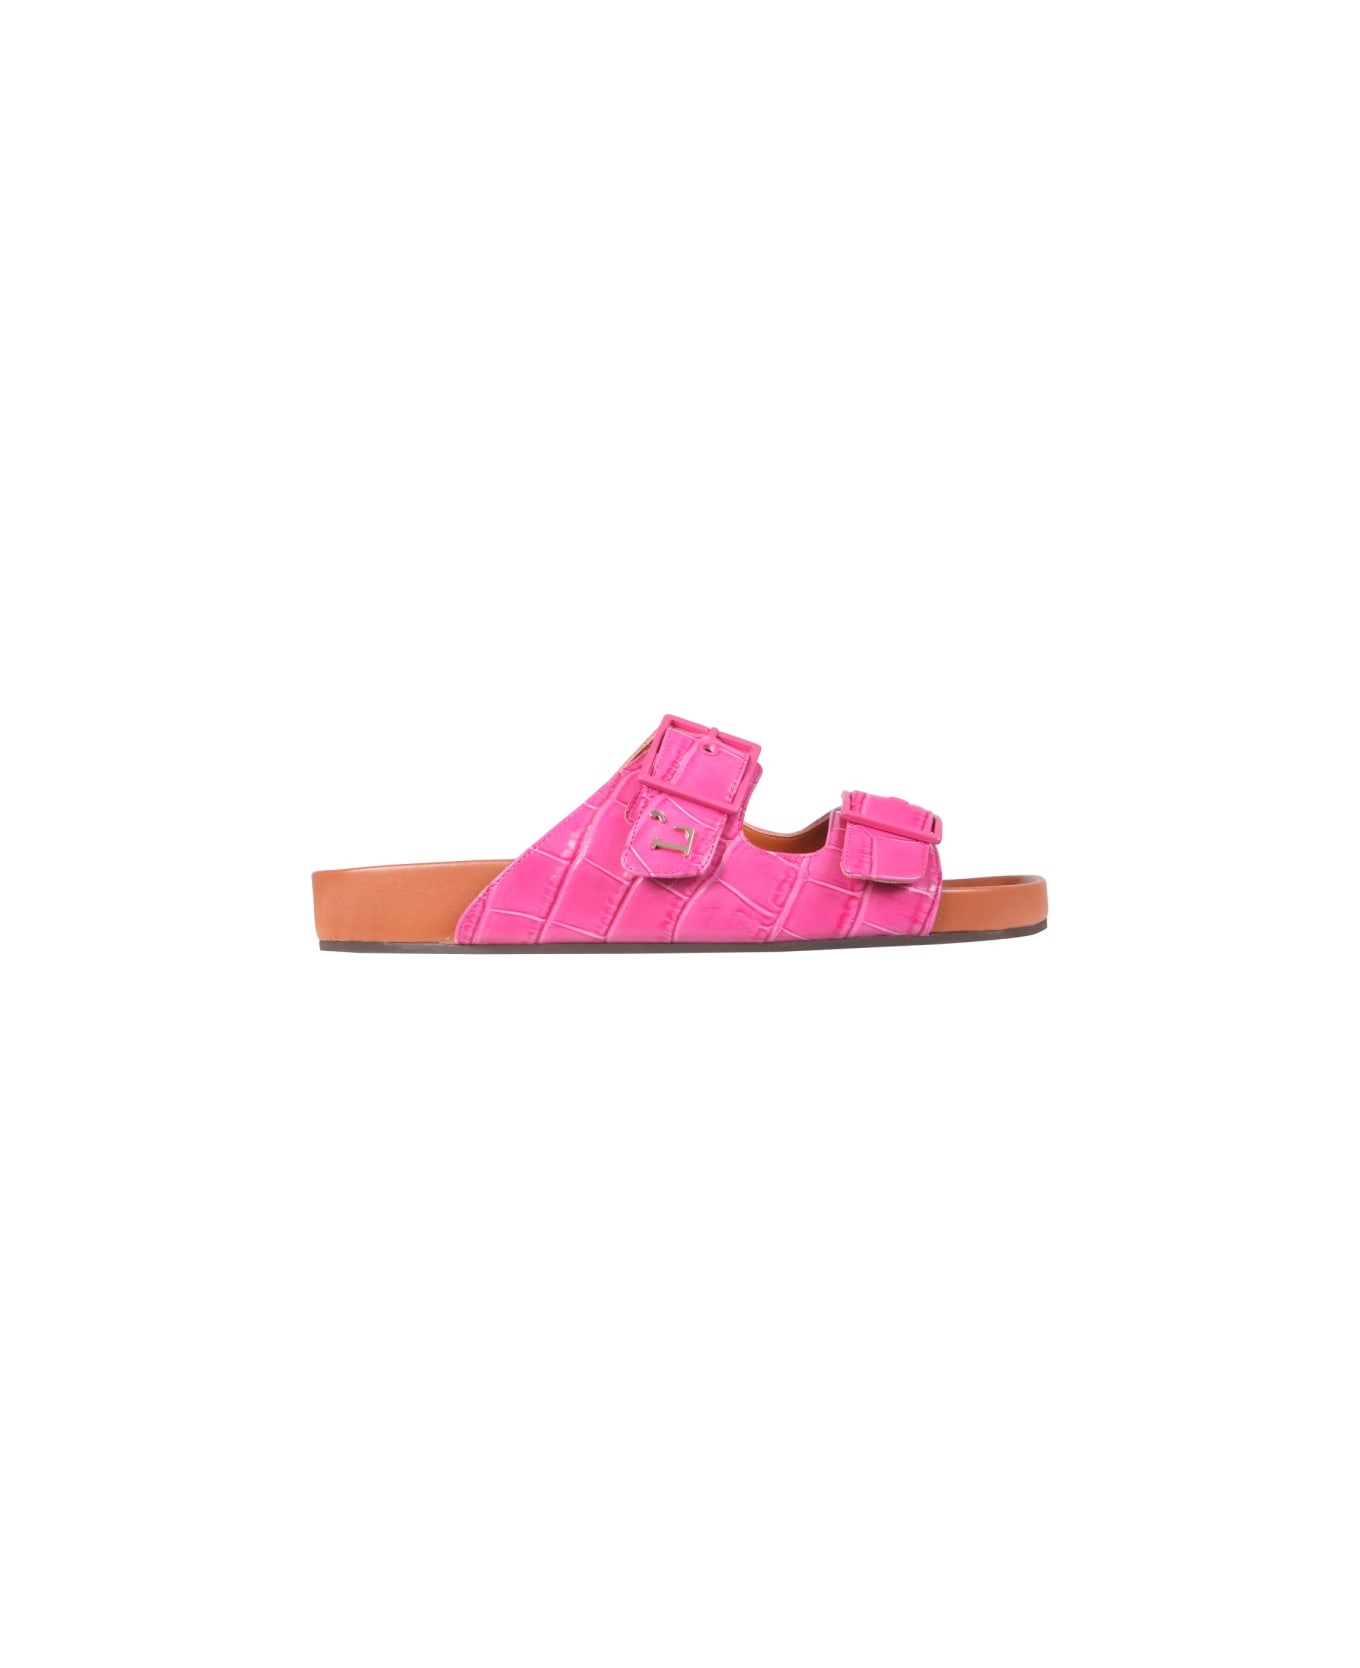 L'Autre Chose Sandals With Coconut Print Leather - FUCHSIA サンダル